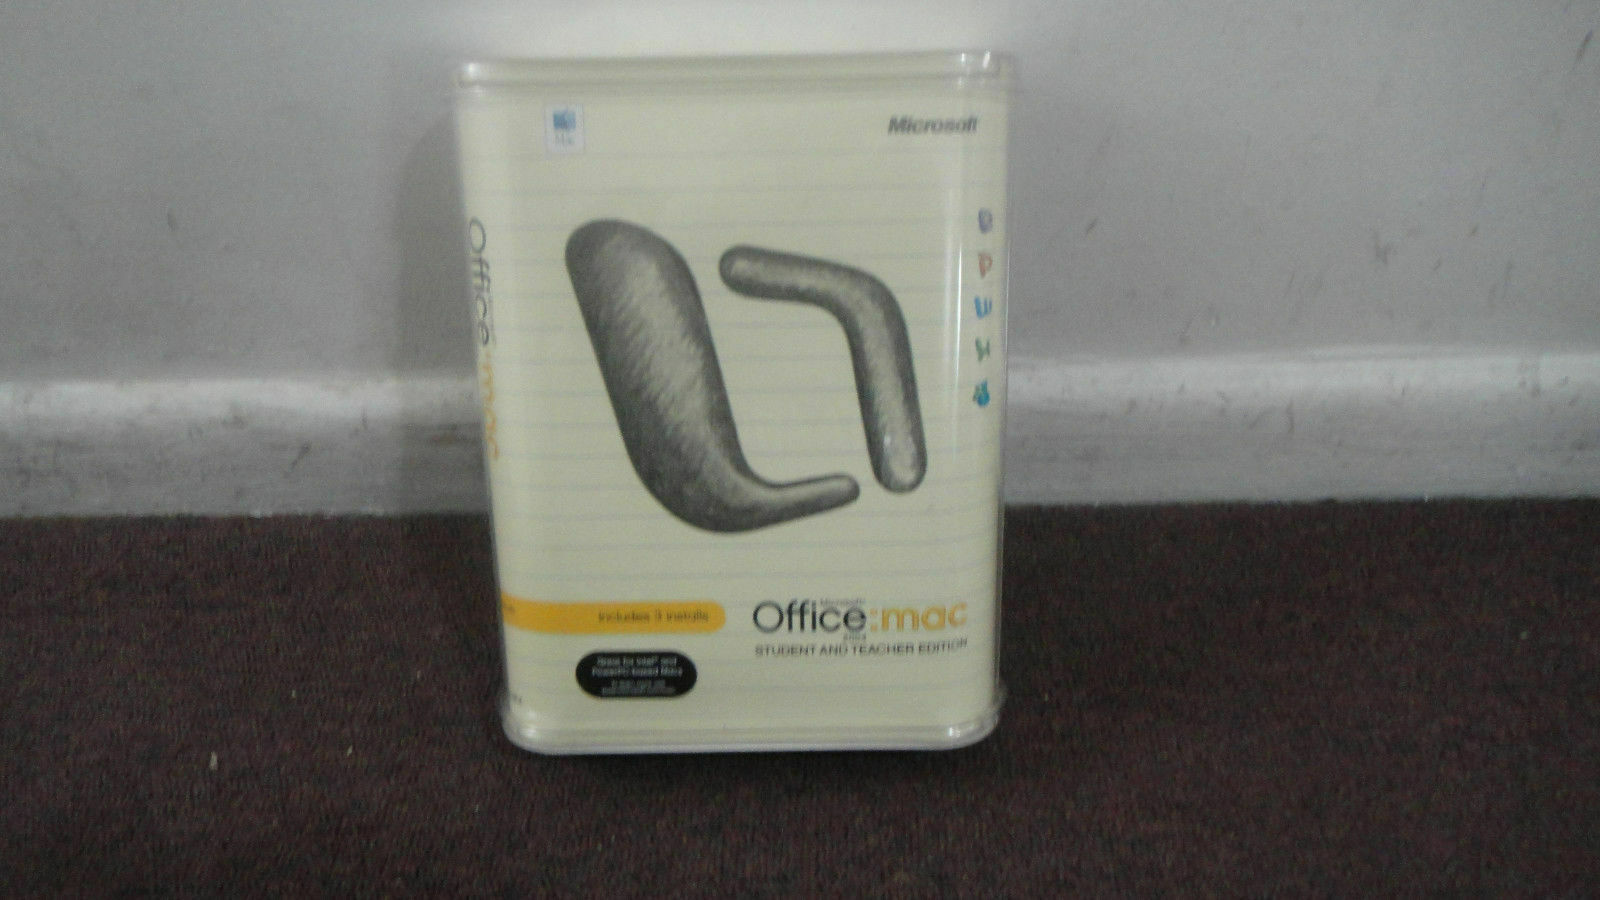 Microsoft Office 2004 Student & Teacher Edition for Mac...LOOK!!!. - $26.83